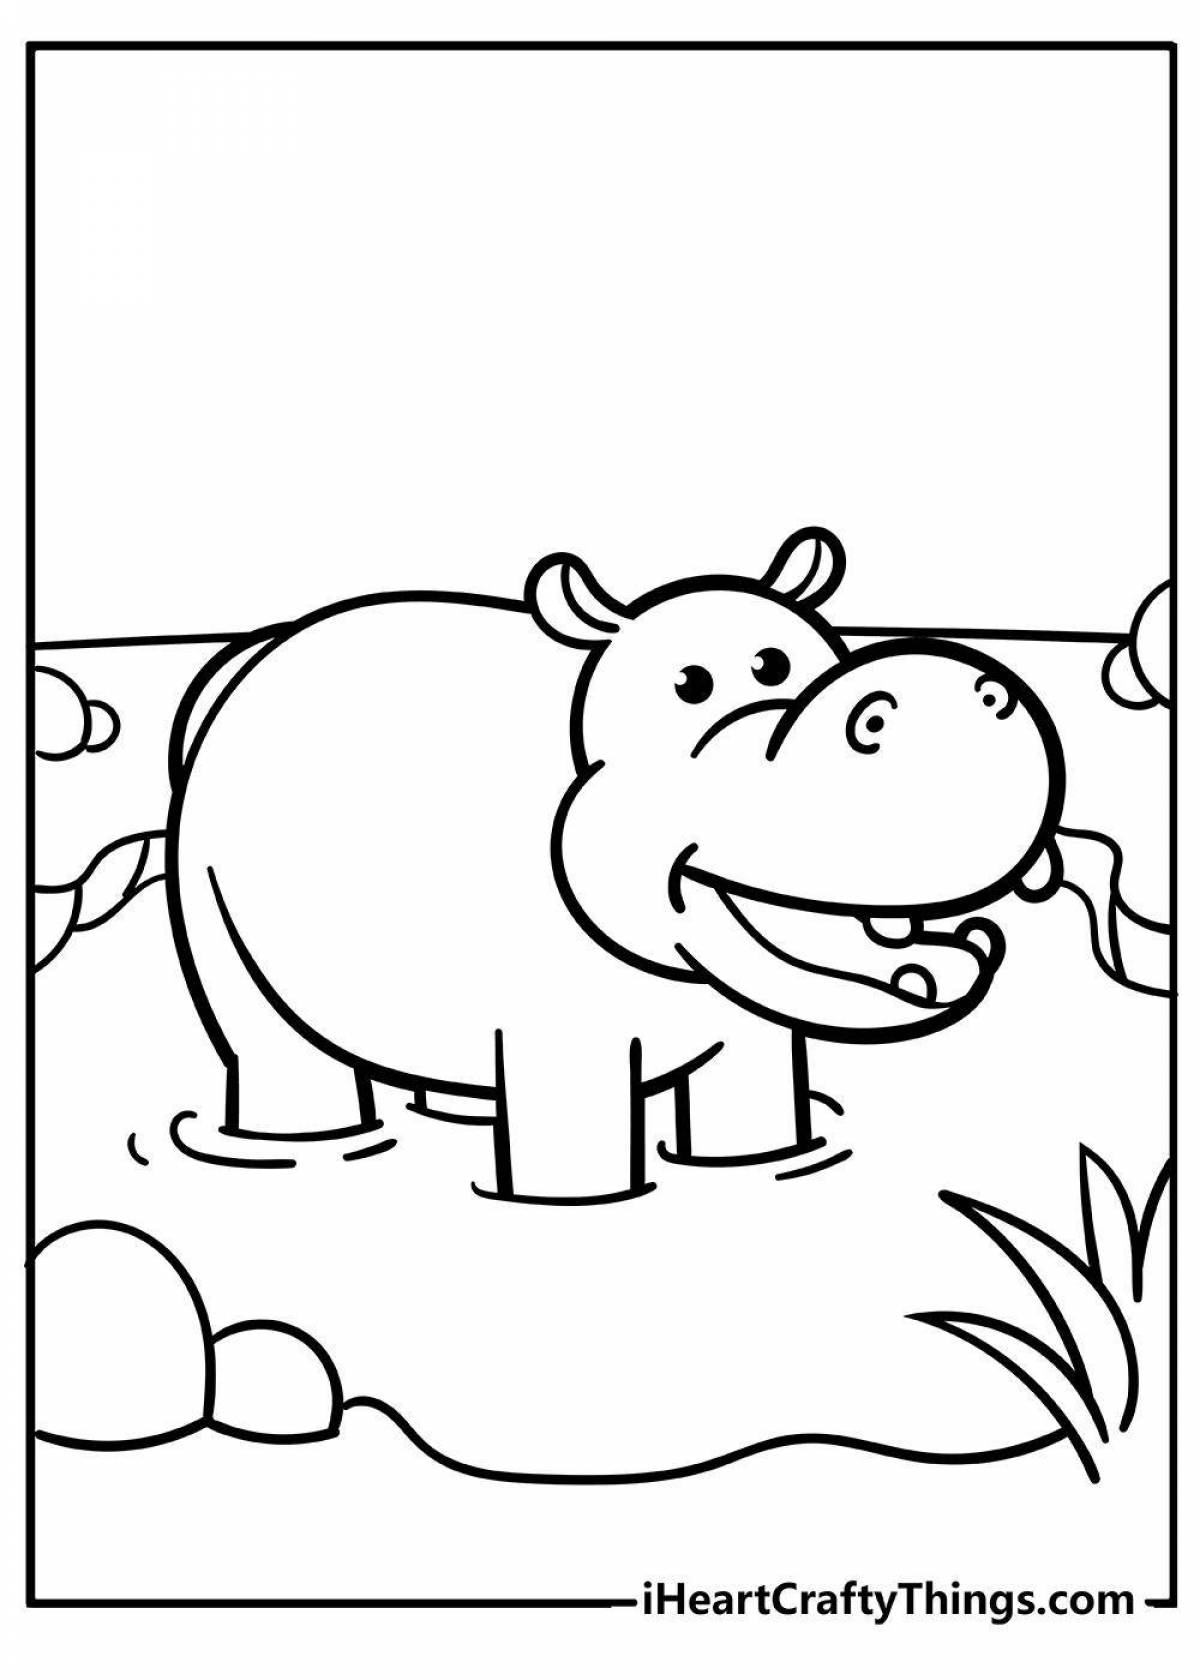 Hippopotamus for children 3 4 years old #4